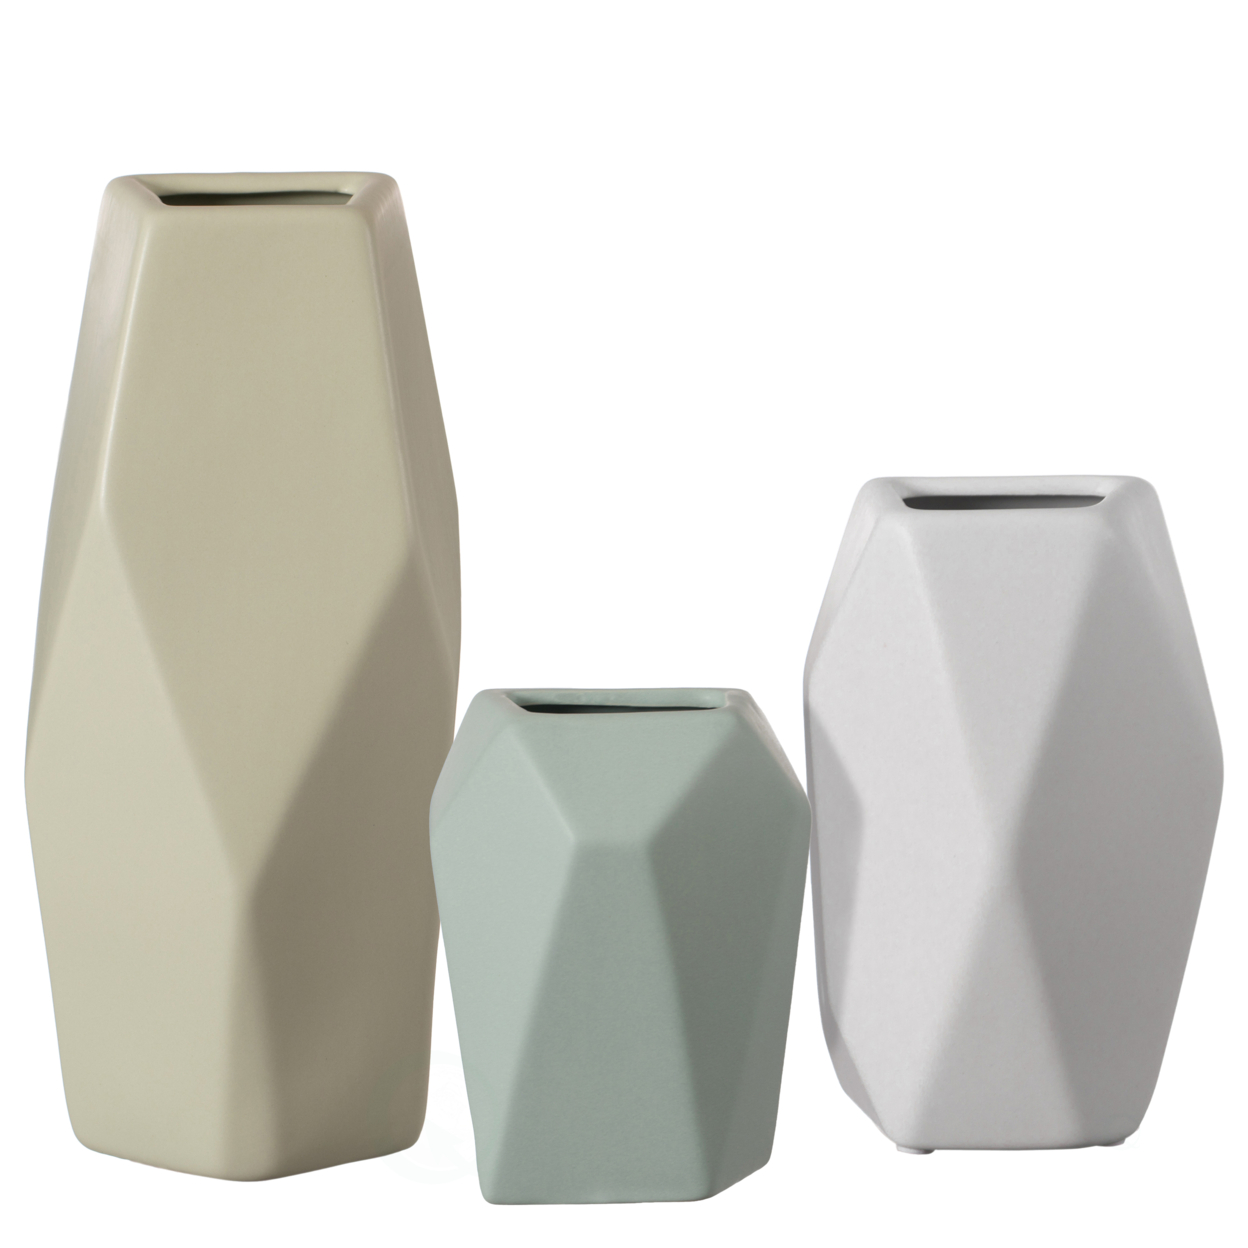 Decorative Ceramic Multi Paned Vase, Modern Style Centerpiece Table Vase - White